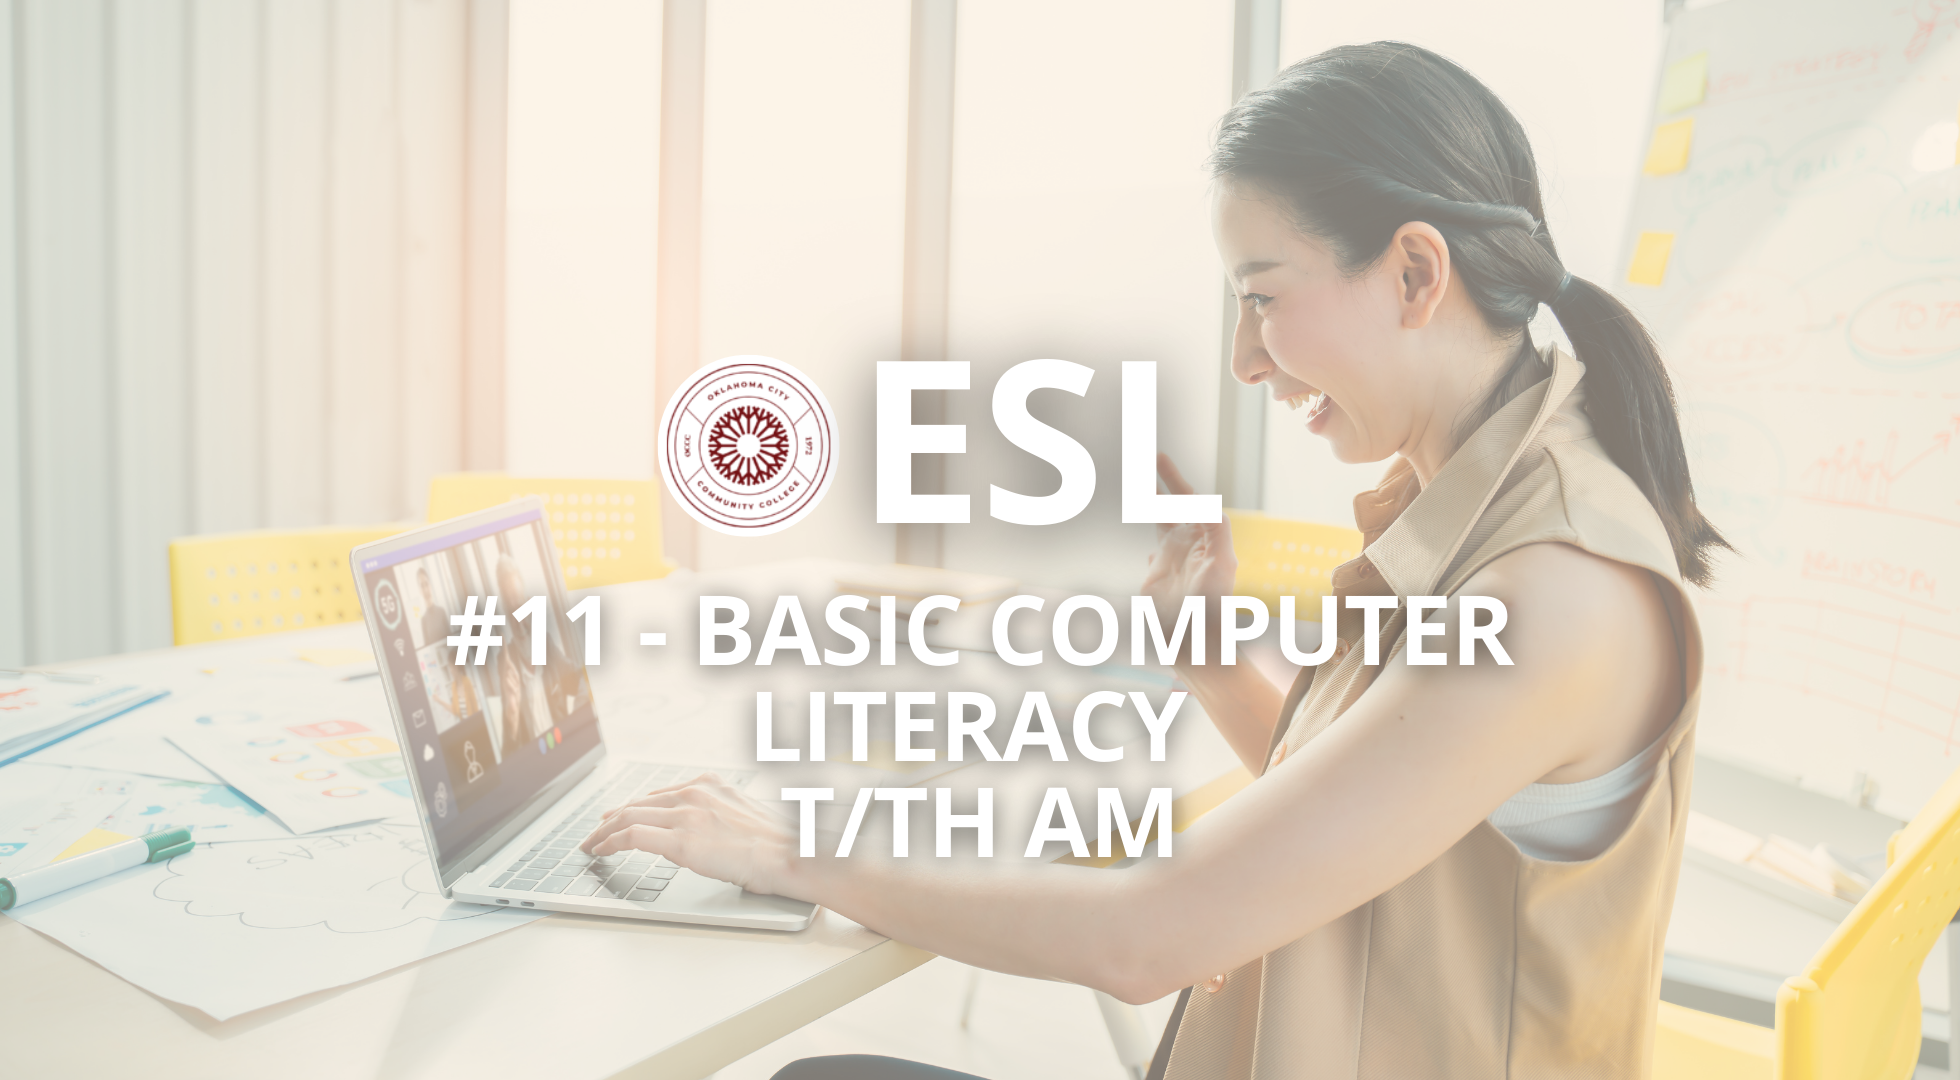 #11 – Basic Computer Literacy T/TH AM